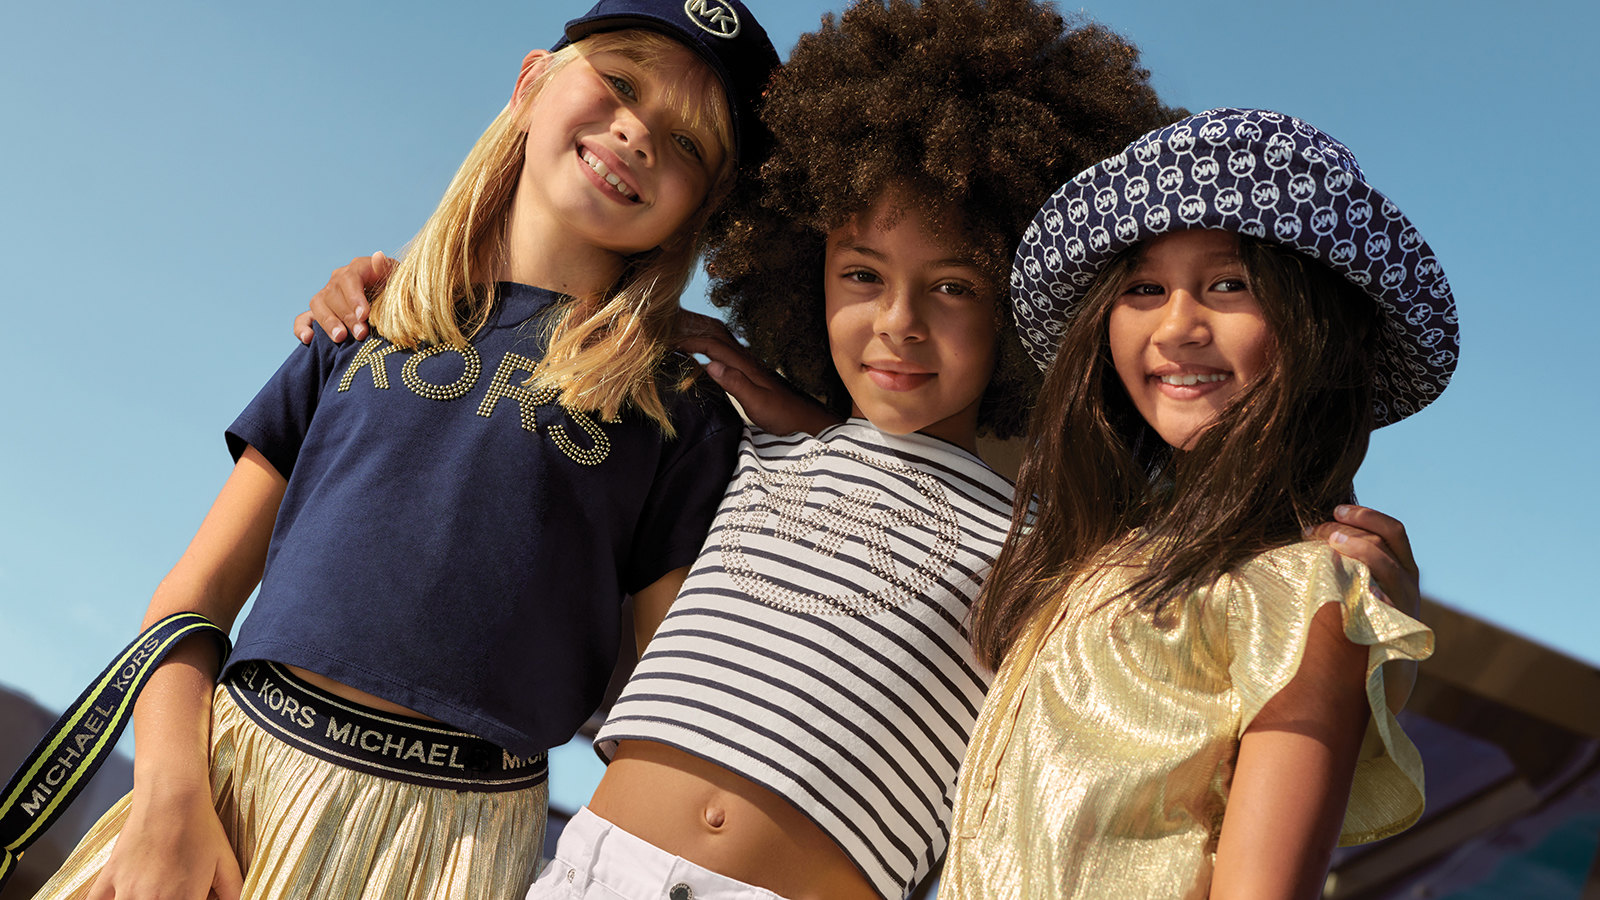 MichaelKors бренд новинка одежда коллекция дети детскаяодежда